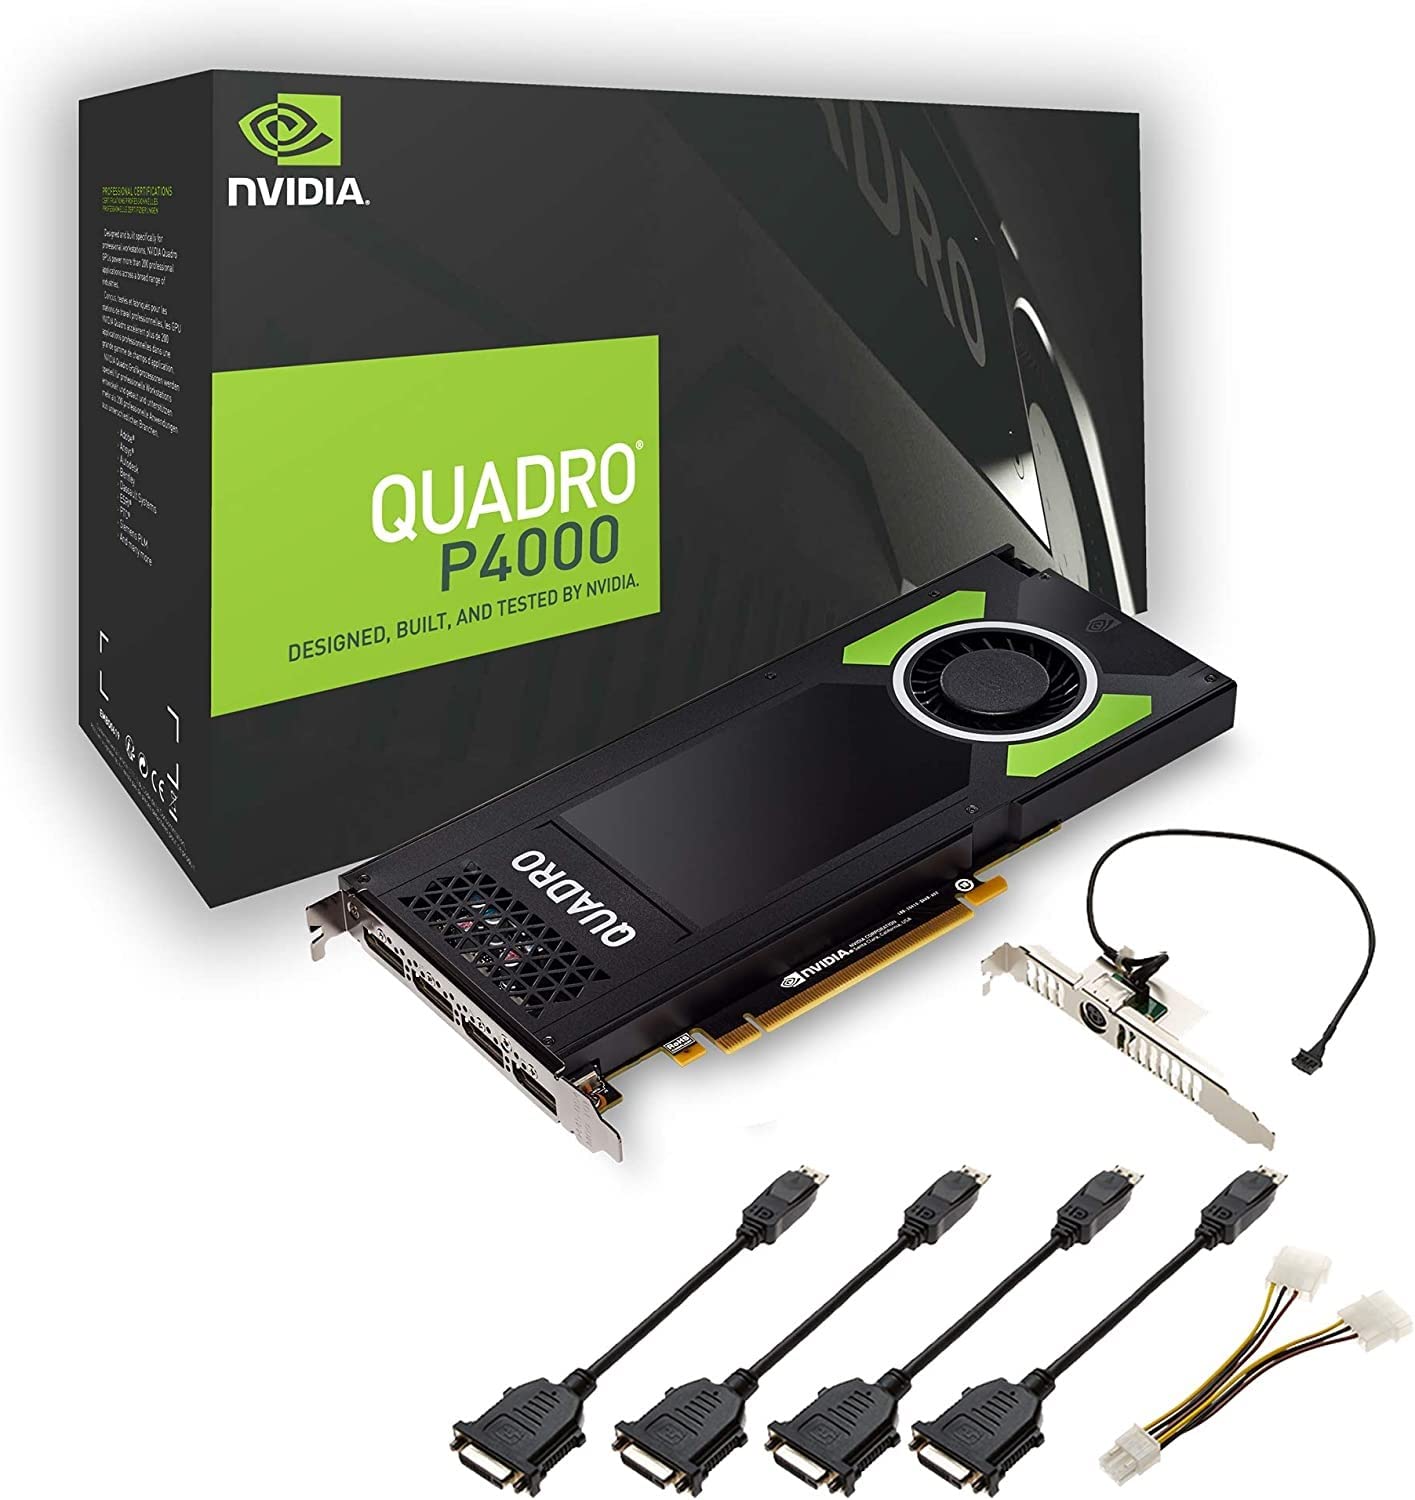 Dell NVIDIA Quadro P4000 Professional Graphic Card 8GB GDDR5 PCI Express 3.0 x16, Dual Slot, 4x DisplayPort, 5K Support, Ultra-quiet active fan (Renewed)